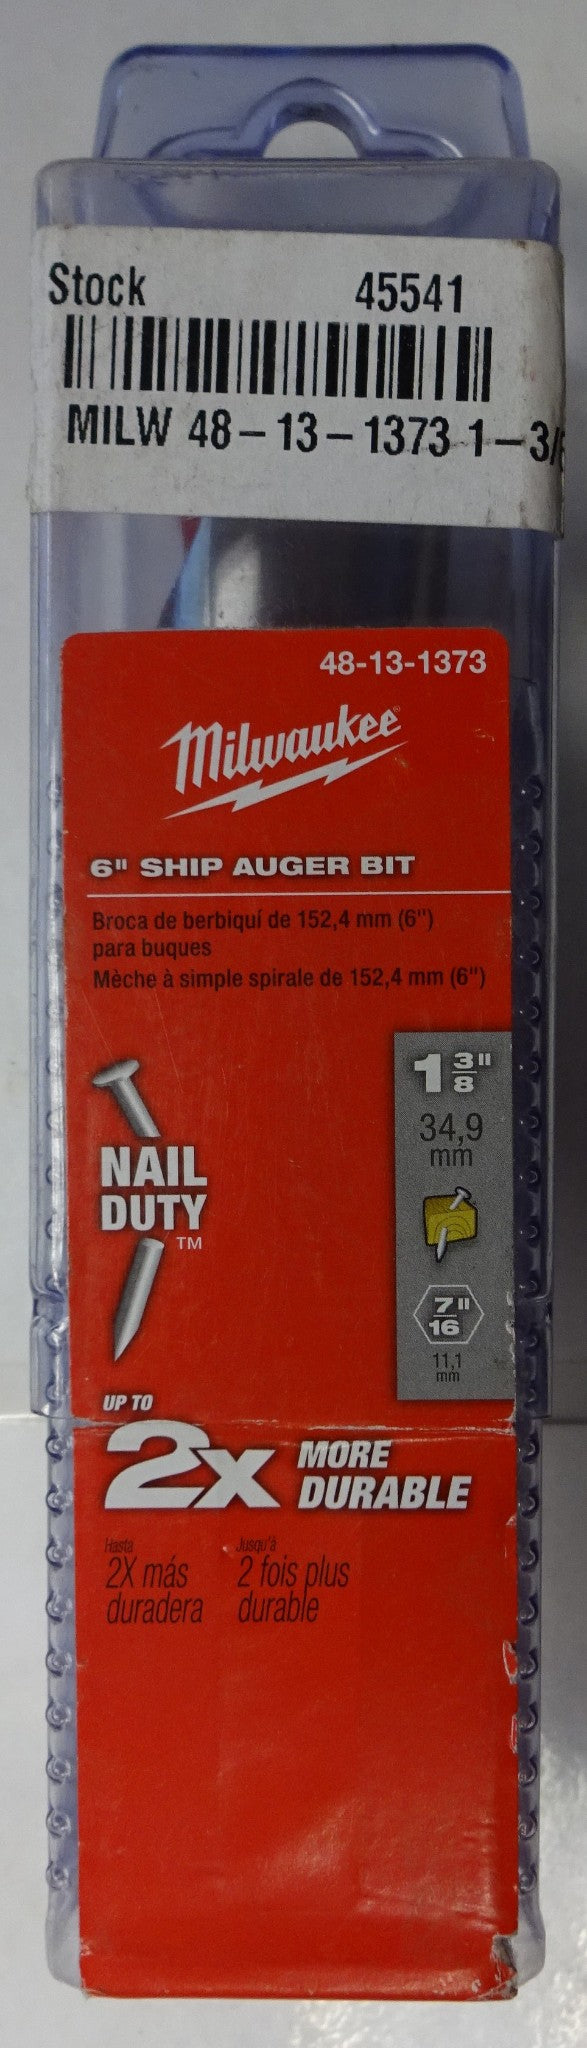 Milwaukee 48-13-1373 1-3/8" x 6" Ship Auger Bit